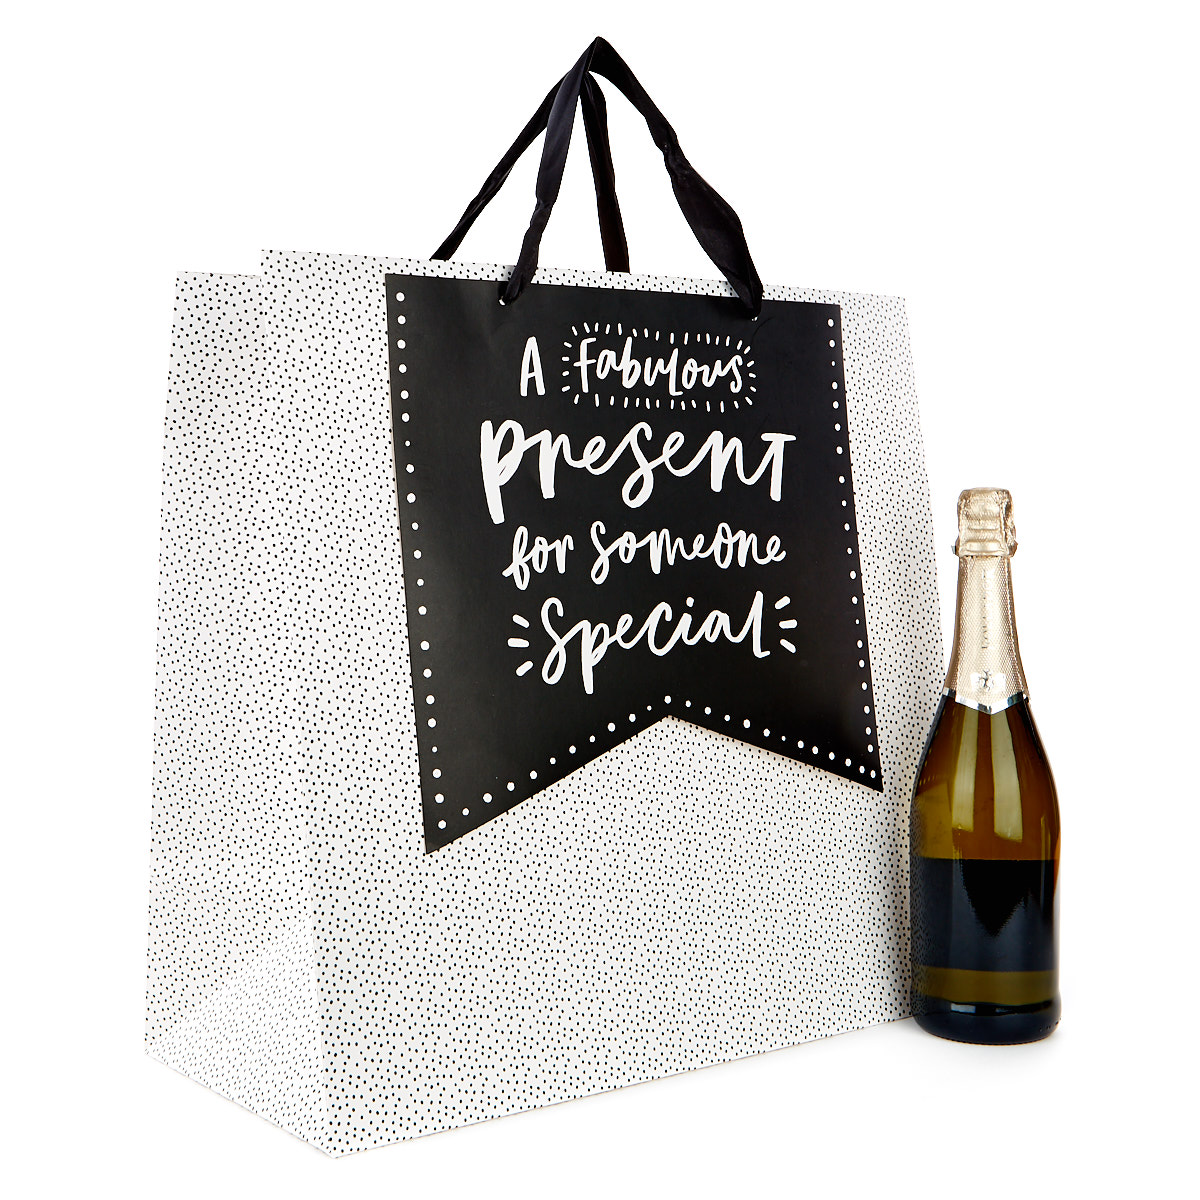 Extra Large Square Gift Bag - Black & White Spots, Fabulous Present